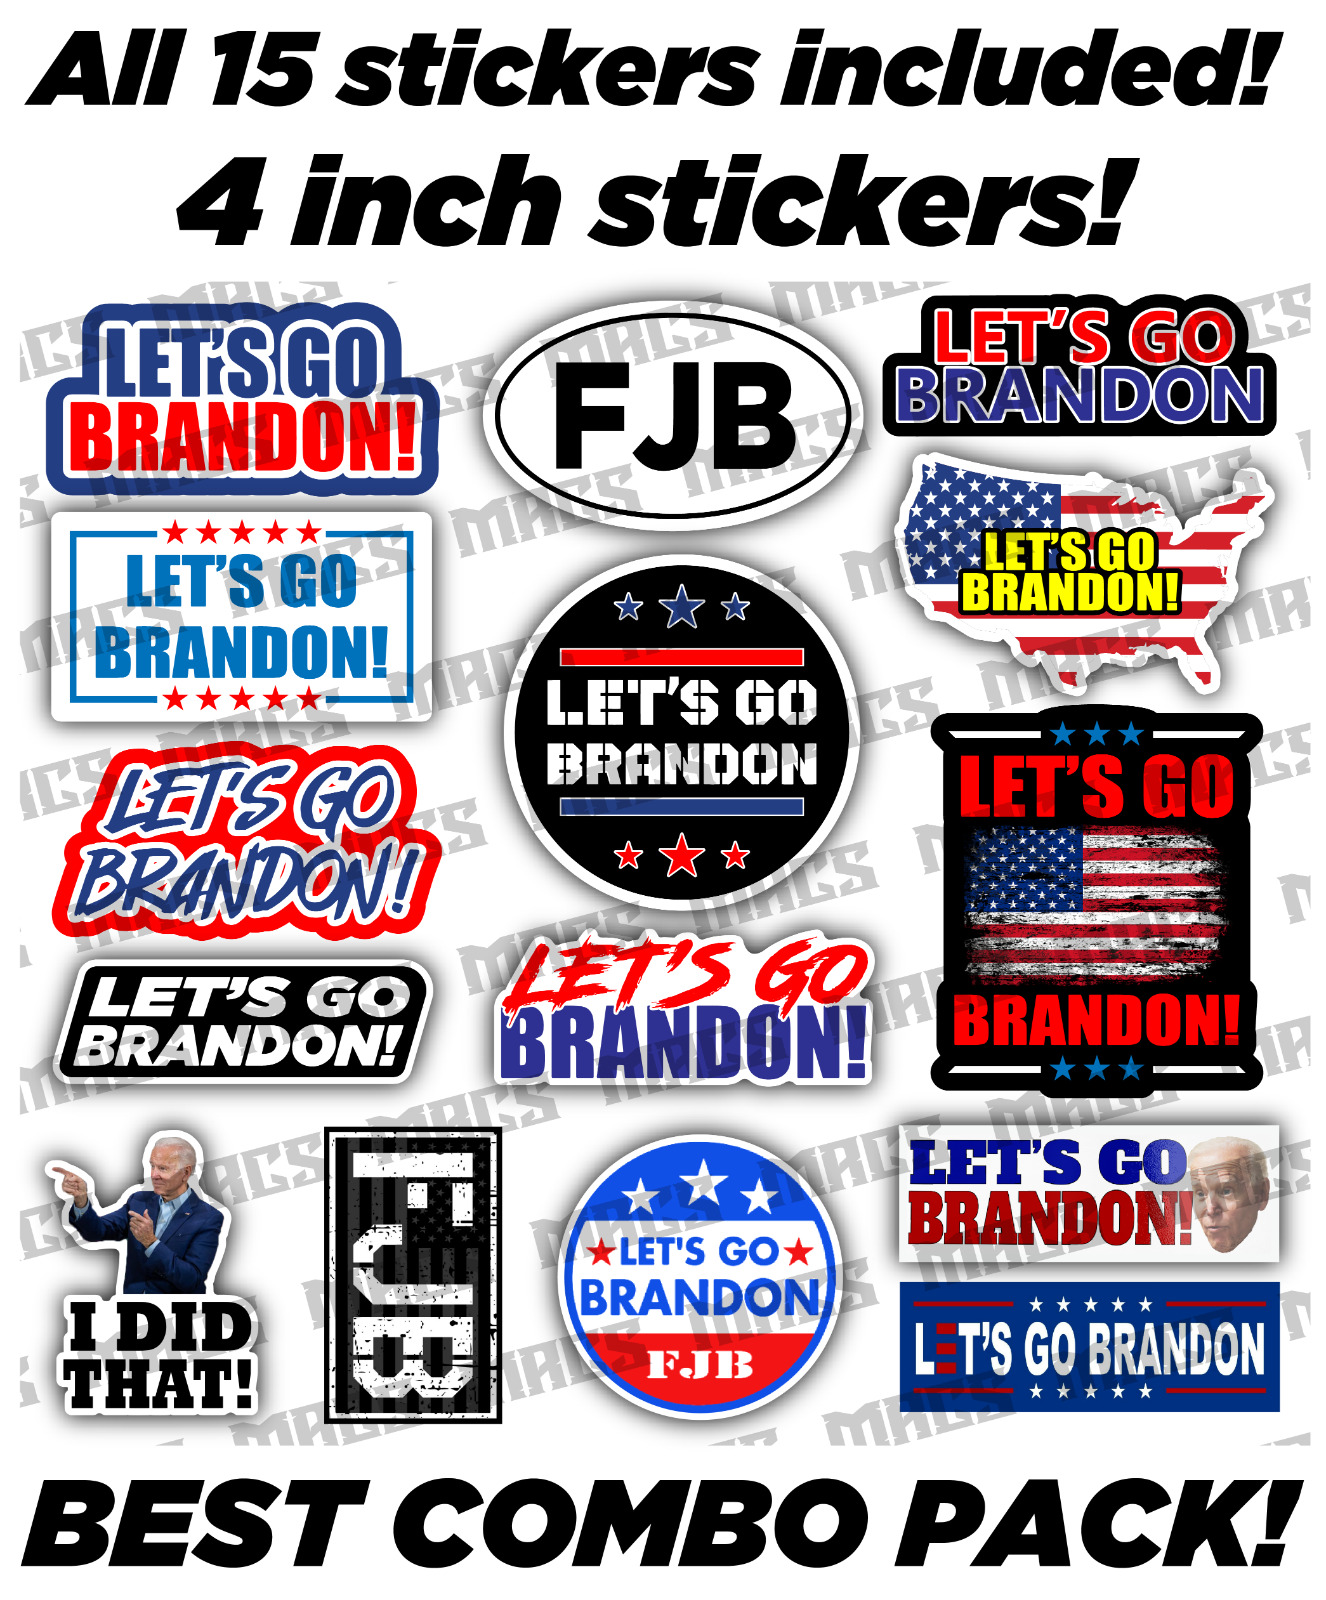 Let's Go Brandon Sticker - car Vinyl Decal funny FJB Joe Biden - 15 stickers